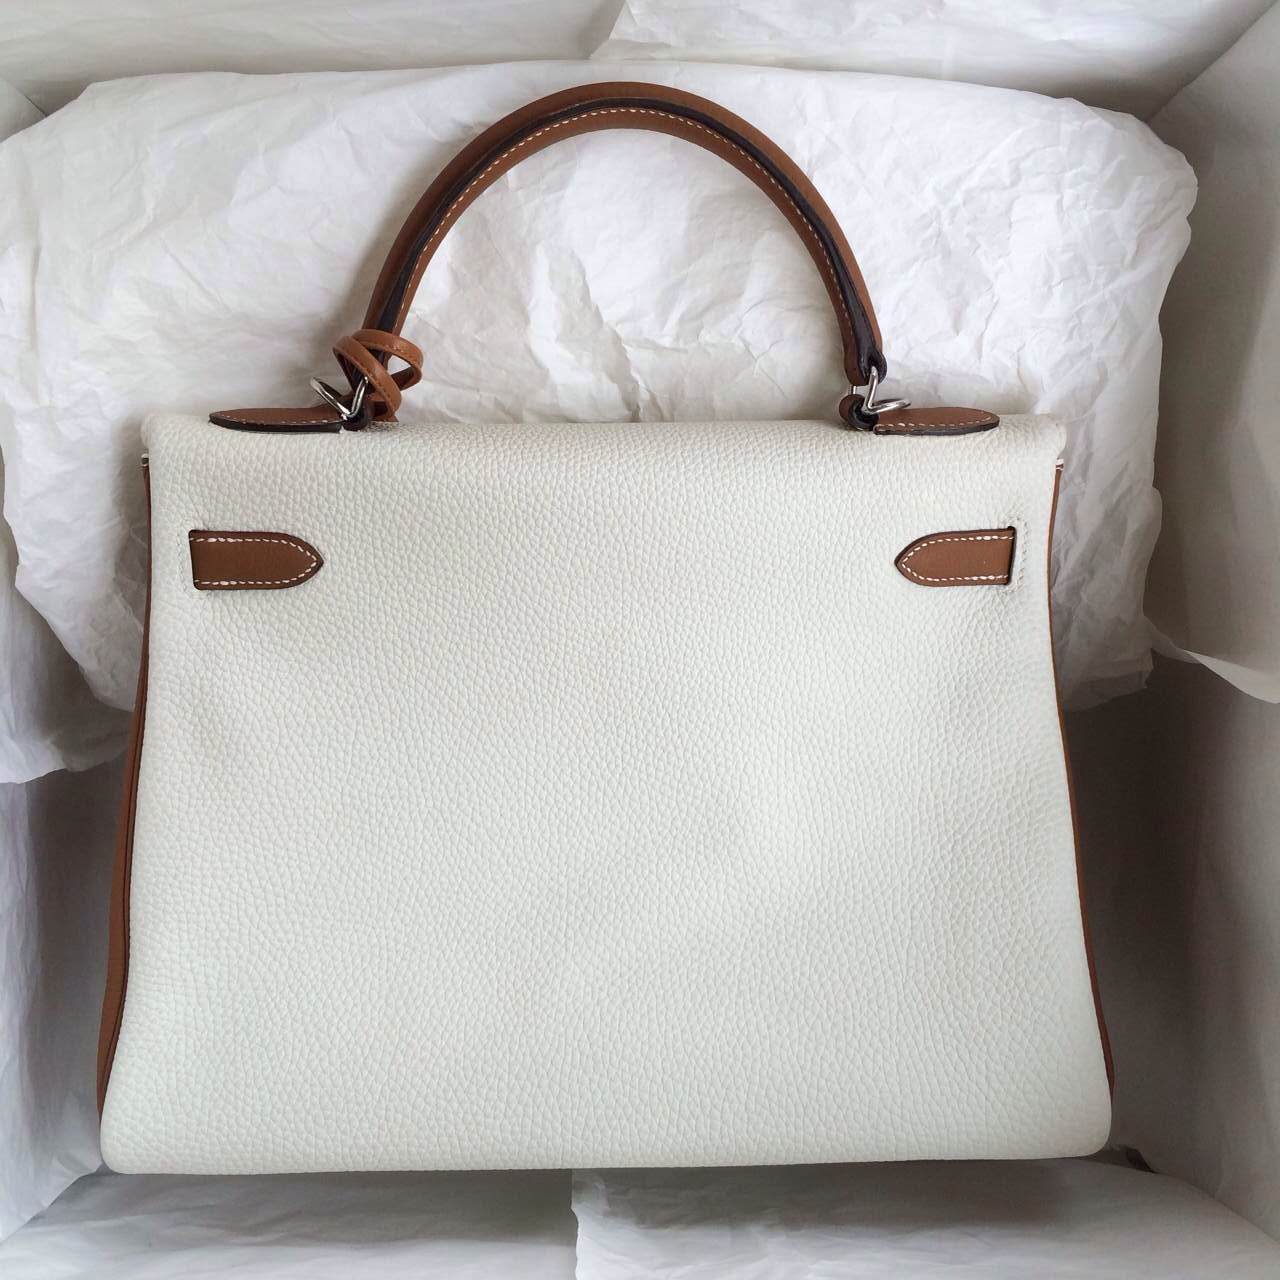 Cheap Hermes Kelly Bag 32cm Retourne in White/Tan Togo Leather Silver Hardware